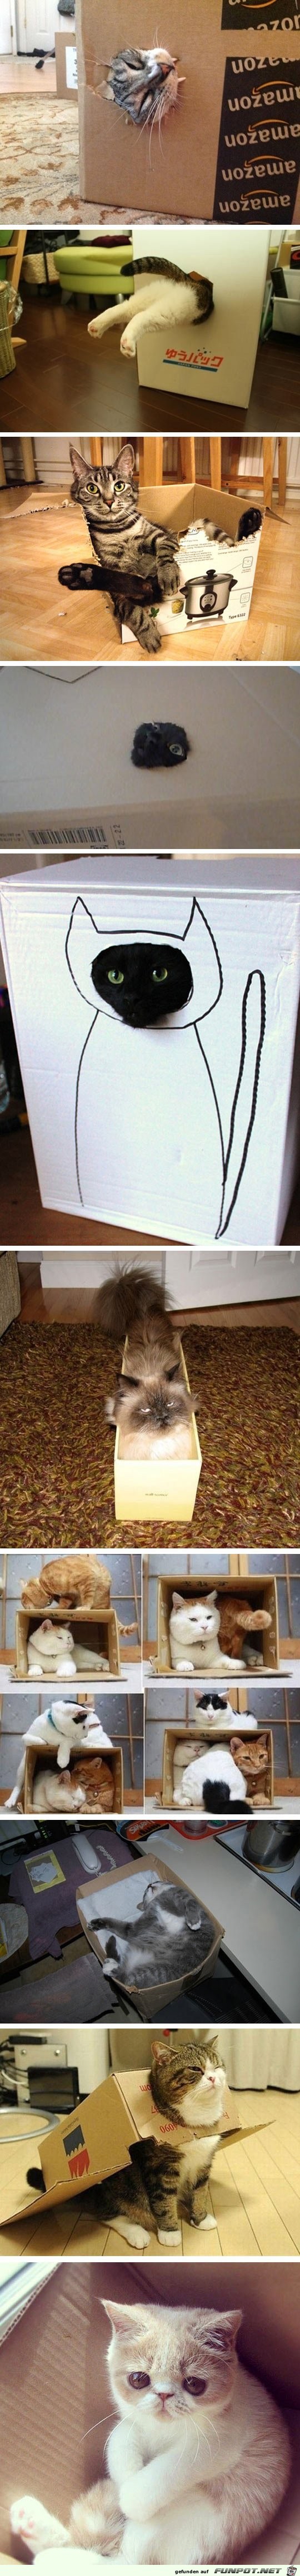 Katzen lieben Kartons